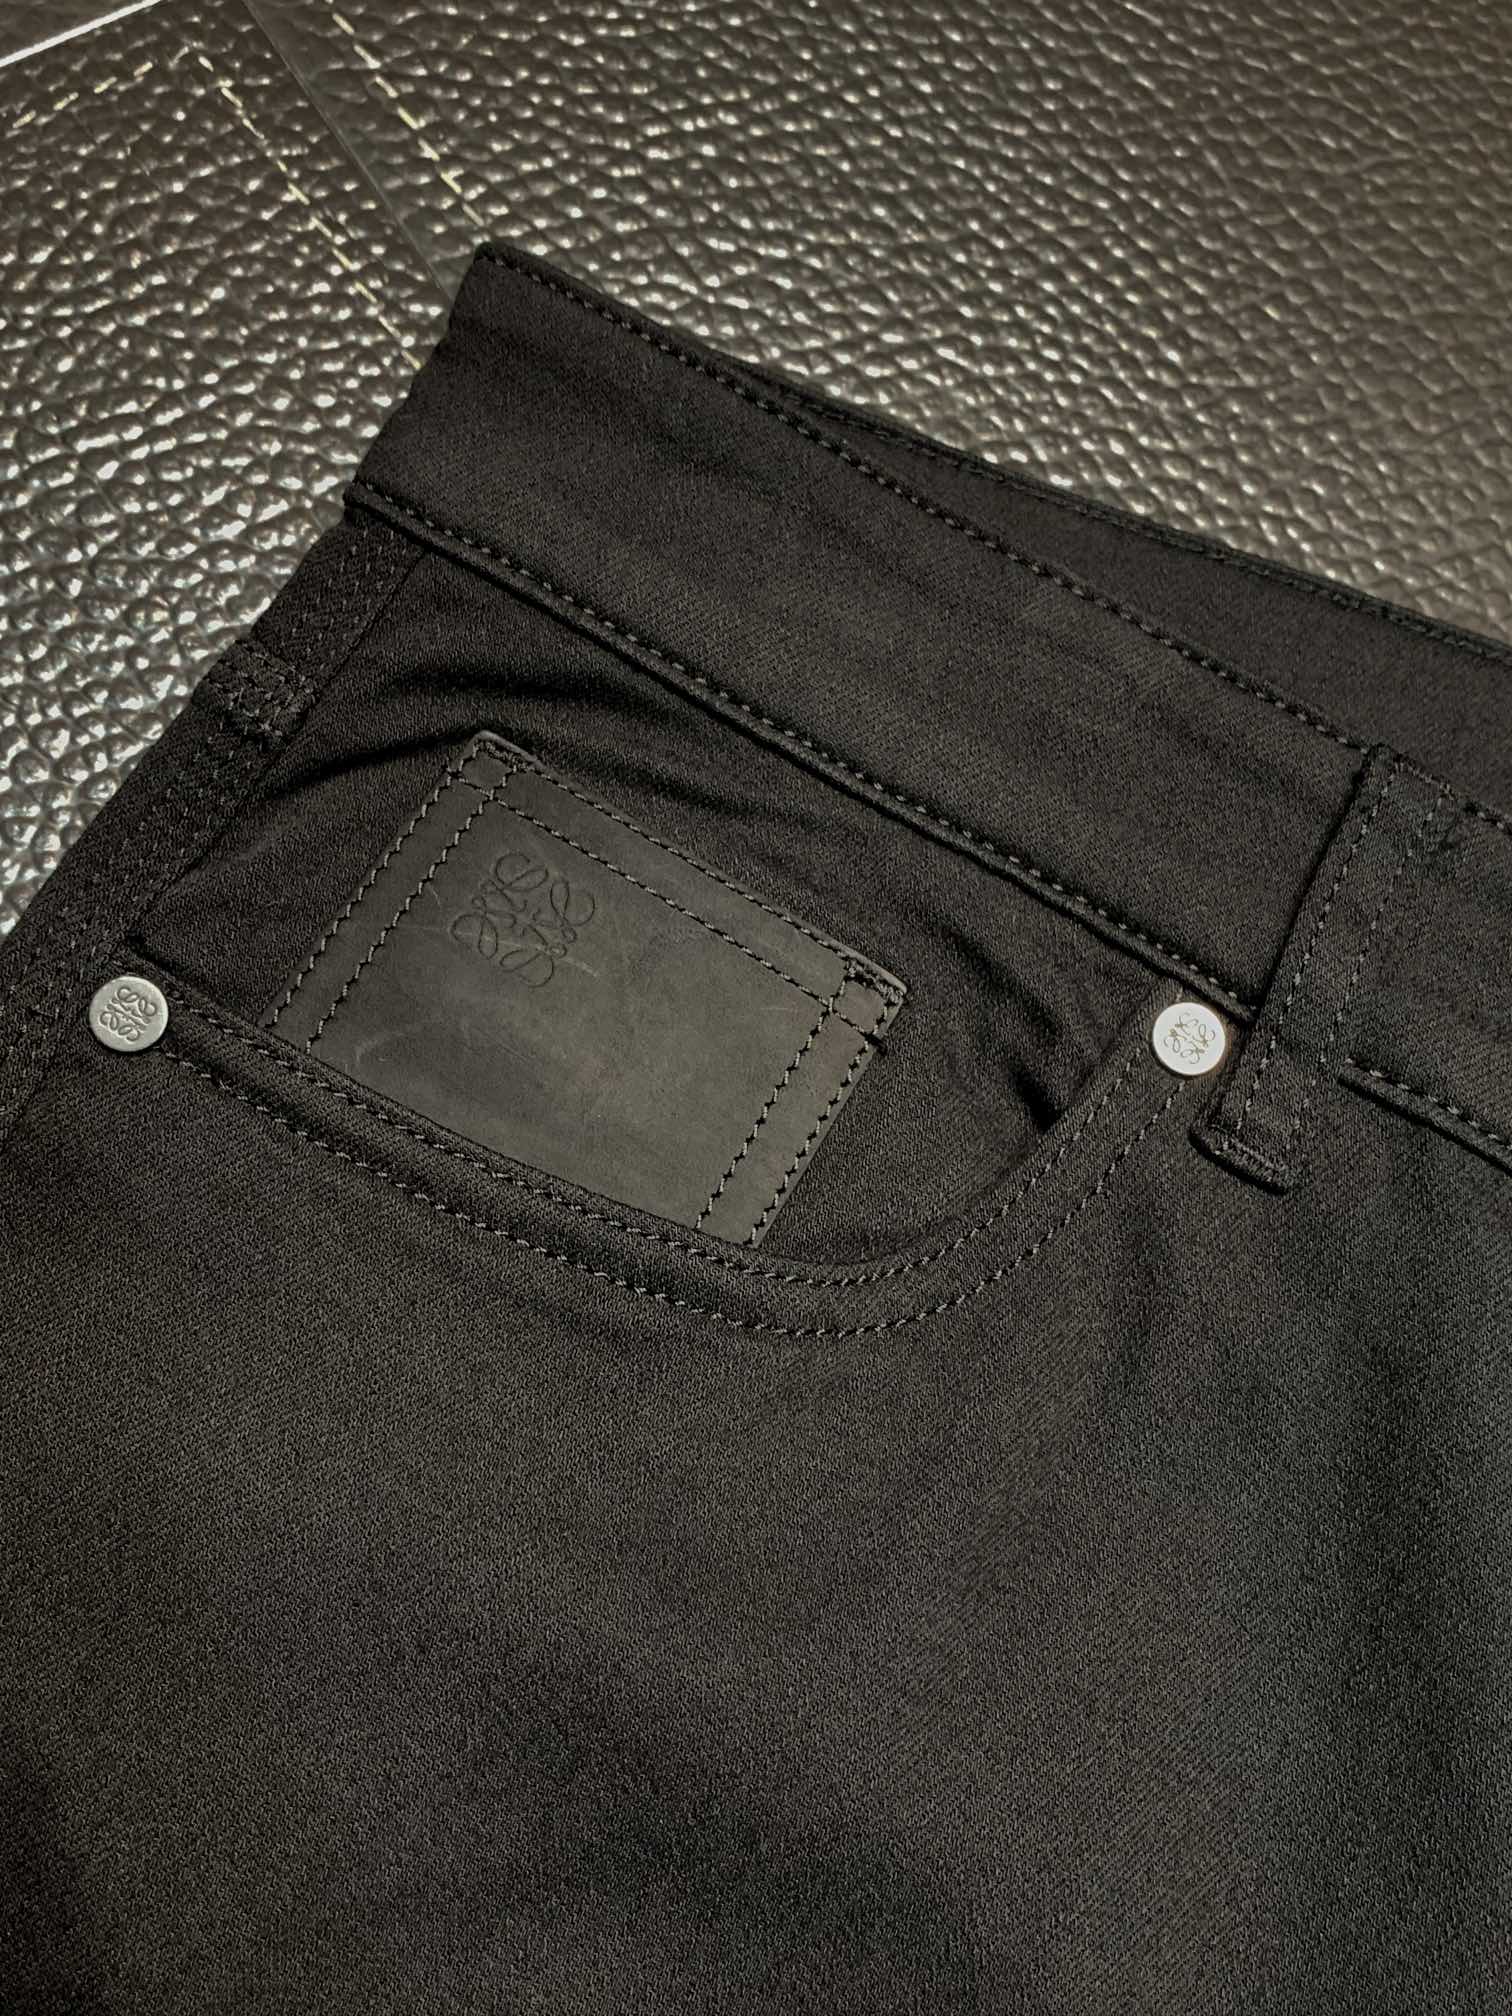 Loewe罗意威独家专供新款休闲牛仔裤长裤高端版本！专柜定制面料透气舒适度高细节无可挑剔品牌元素设计理念